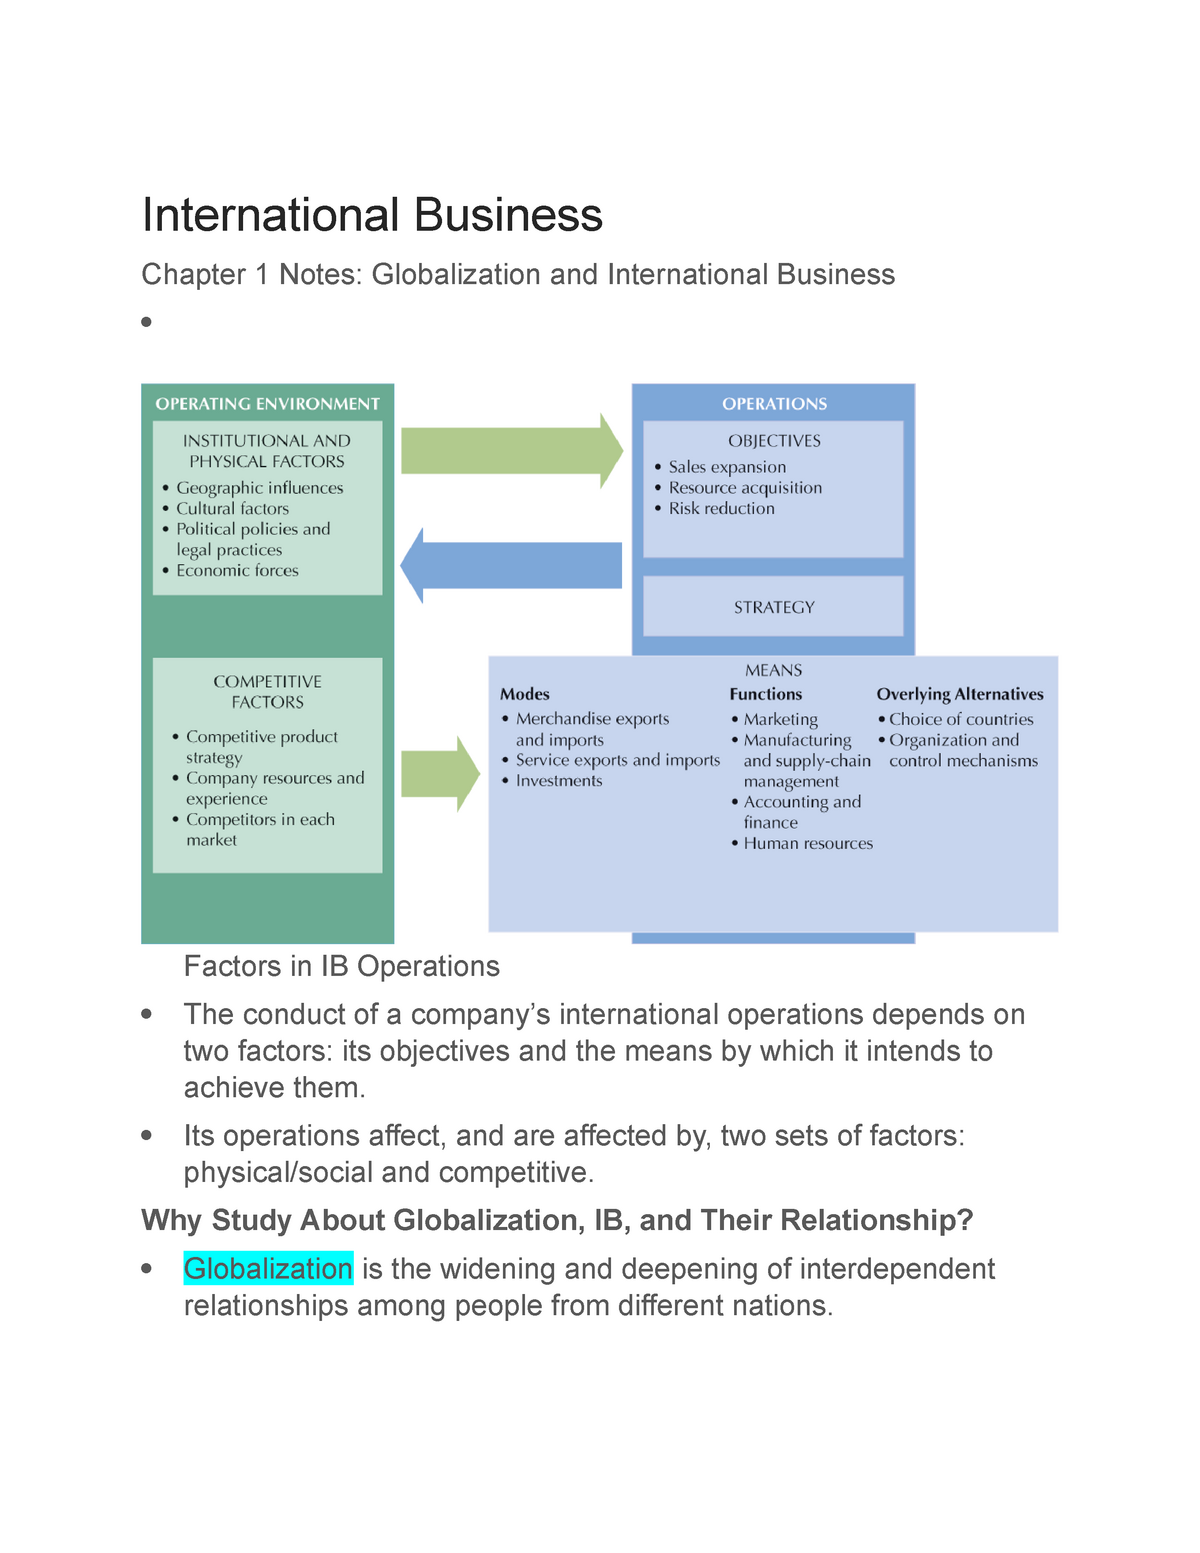 what cultural factors affect international business activities